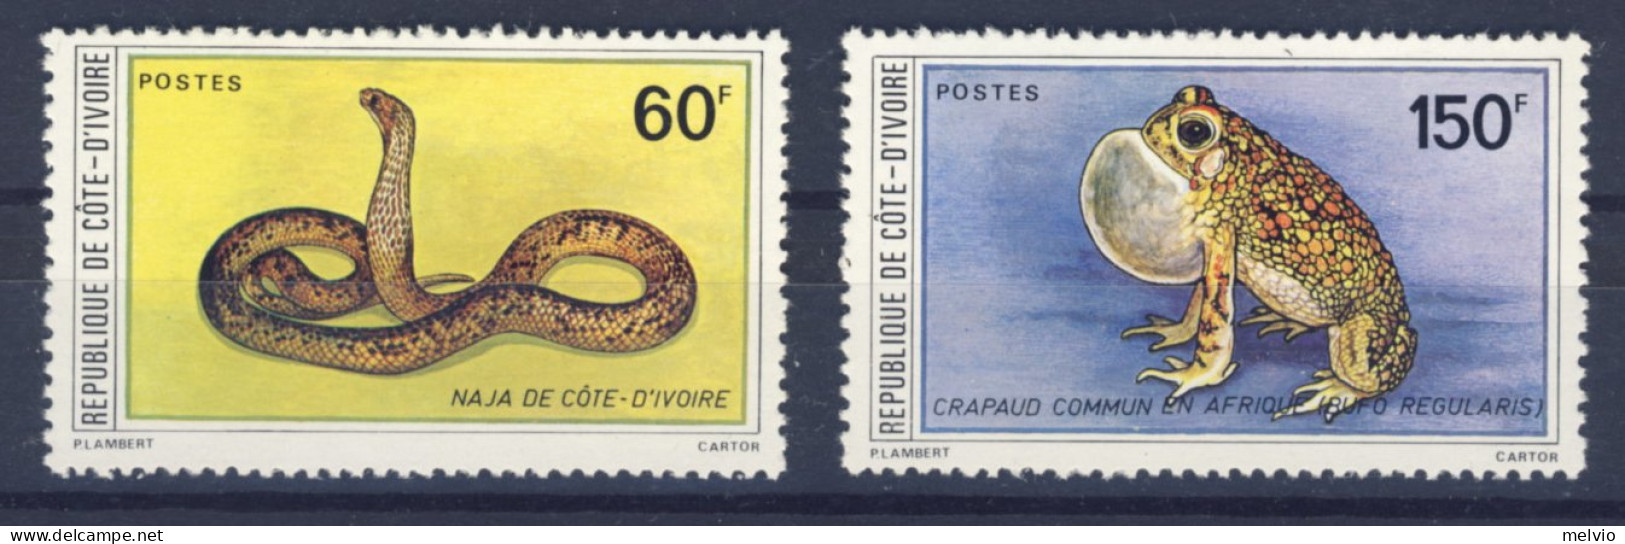 1980-Costa D'Avorio (MNH=**) Serie 2 Valori Serpente,rana - Côte D'Ivoire (1960-...)